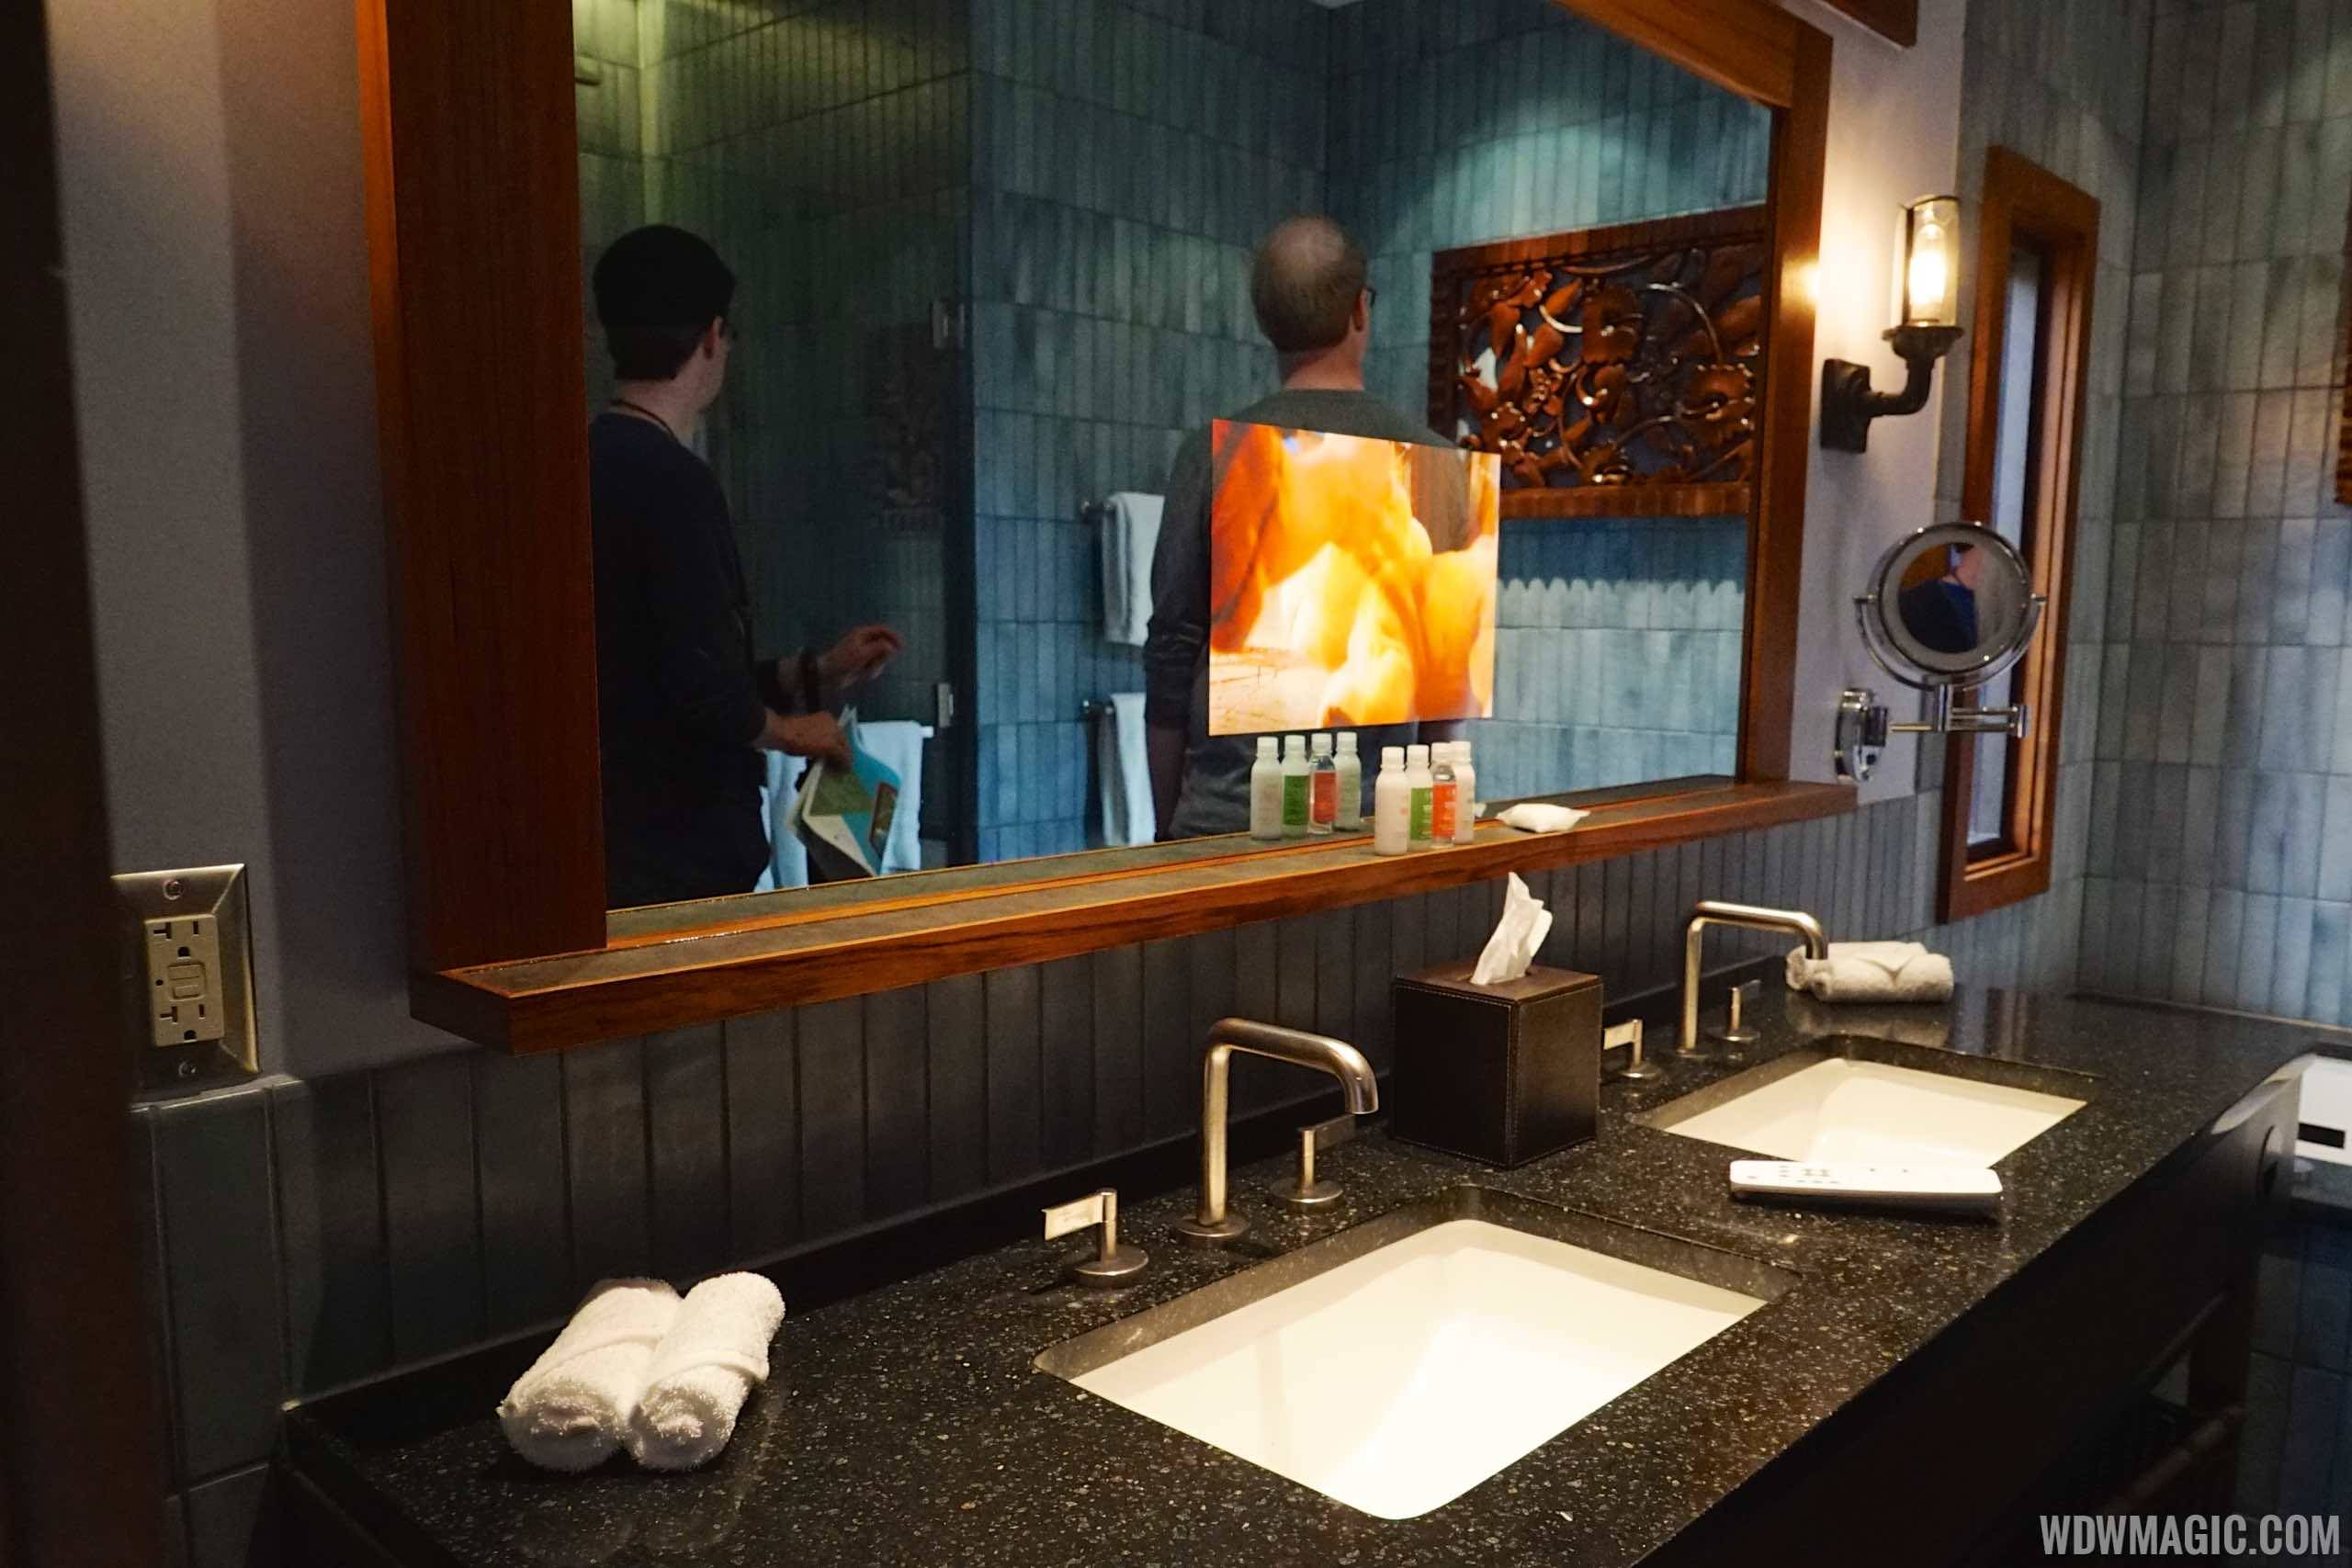 Disney's Polynesian Village Resort Bora Bora Bungalow - Master bathroom